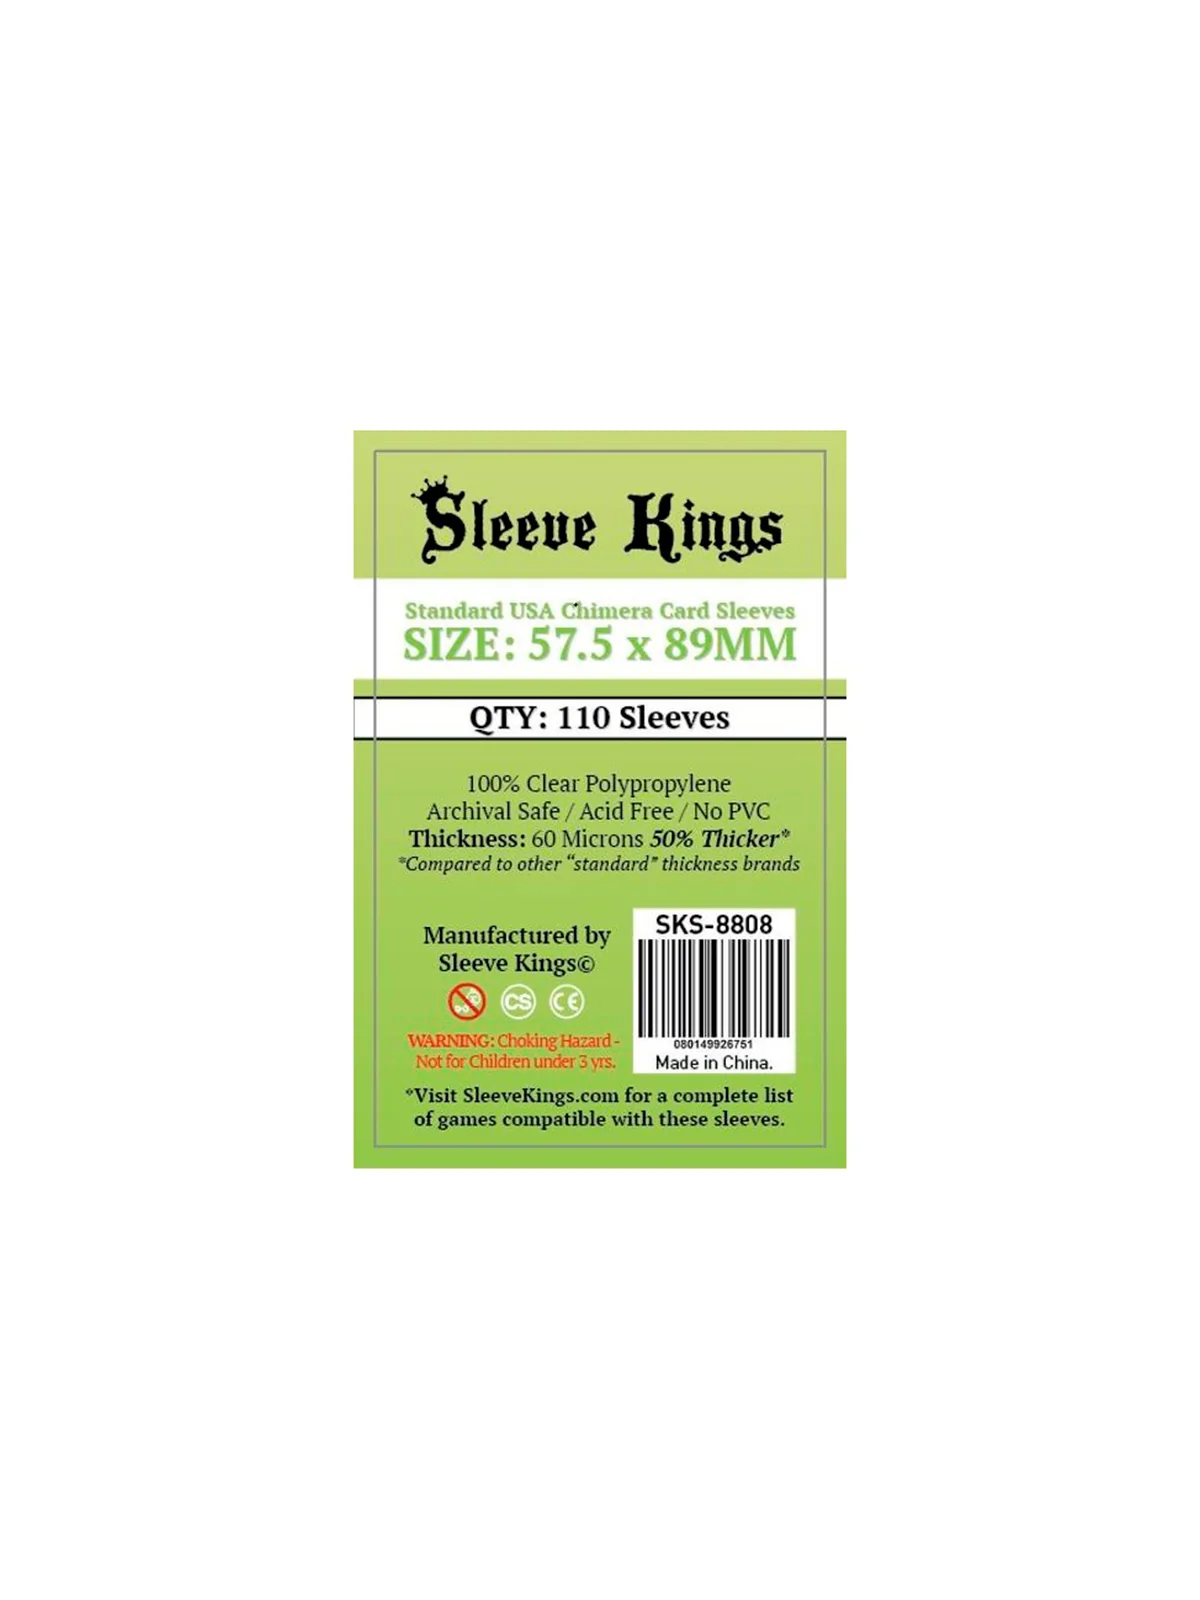 Comprar [8808] Sleeve Kings Standard USA Chimera Card Sleeves (57.5x89